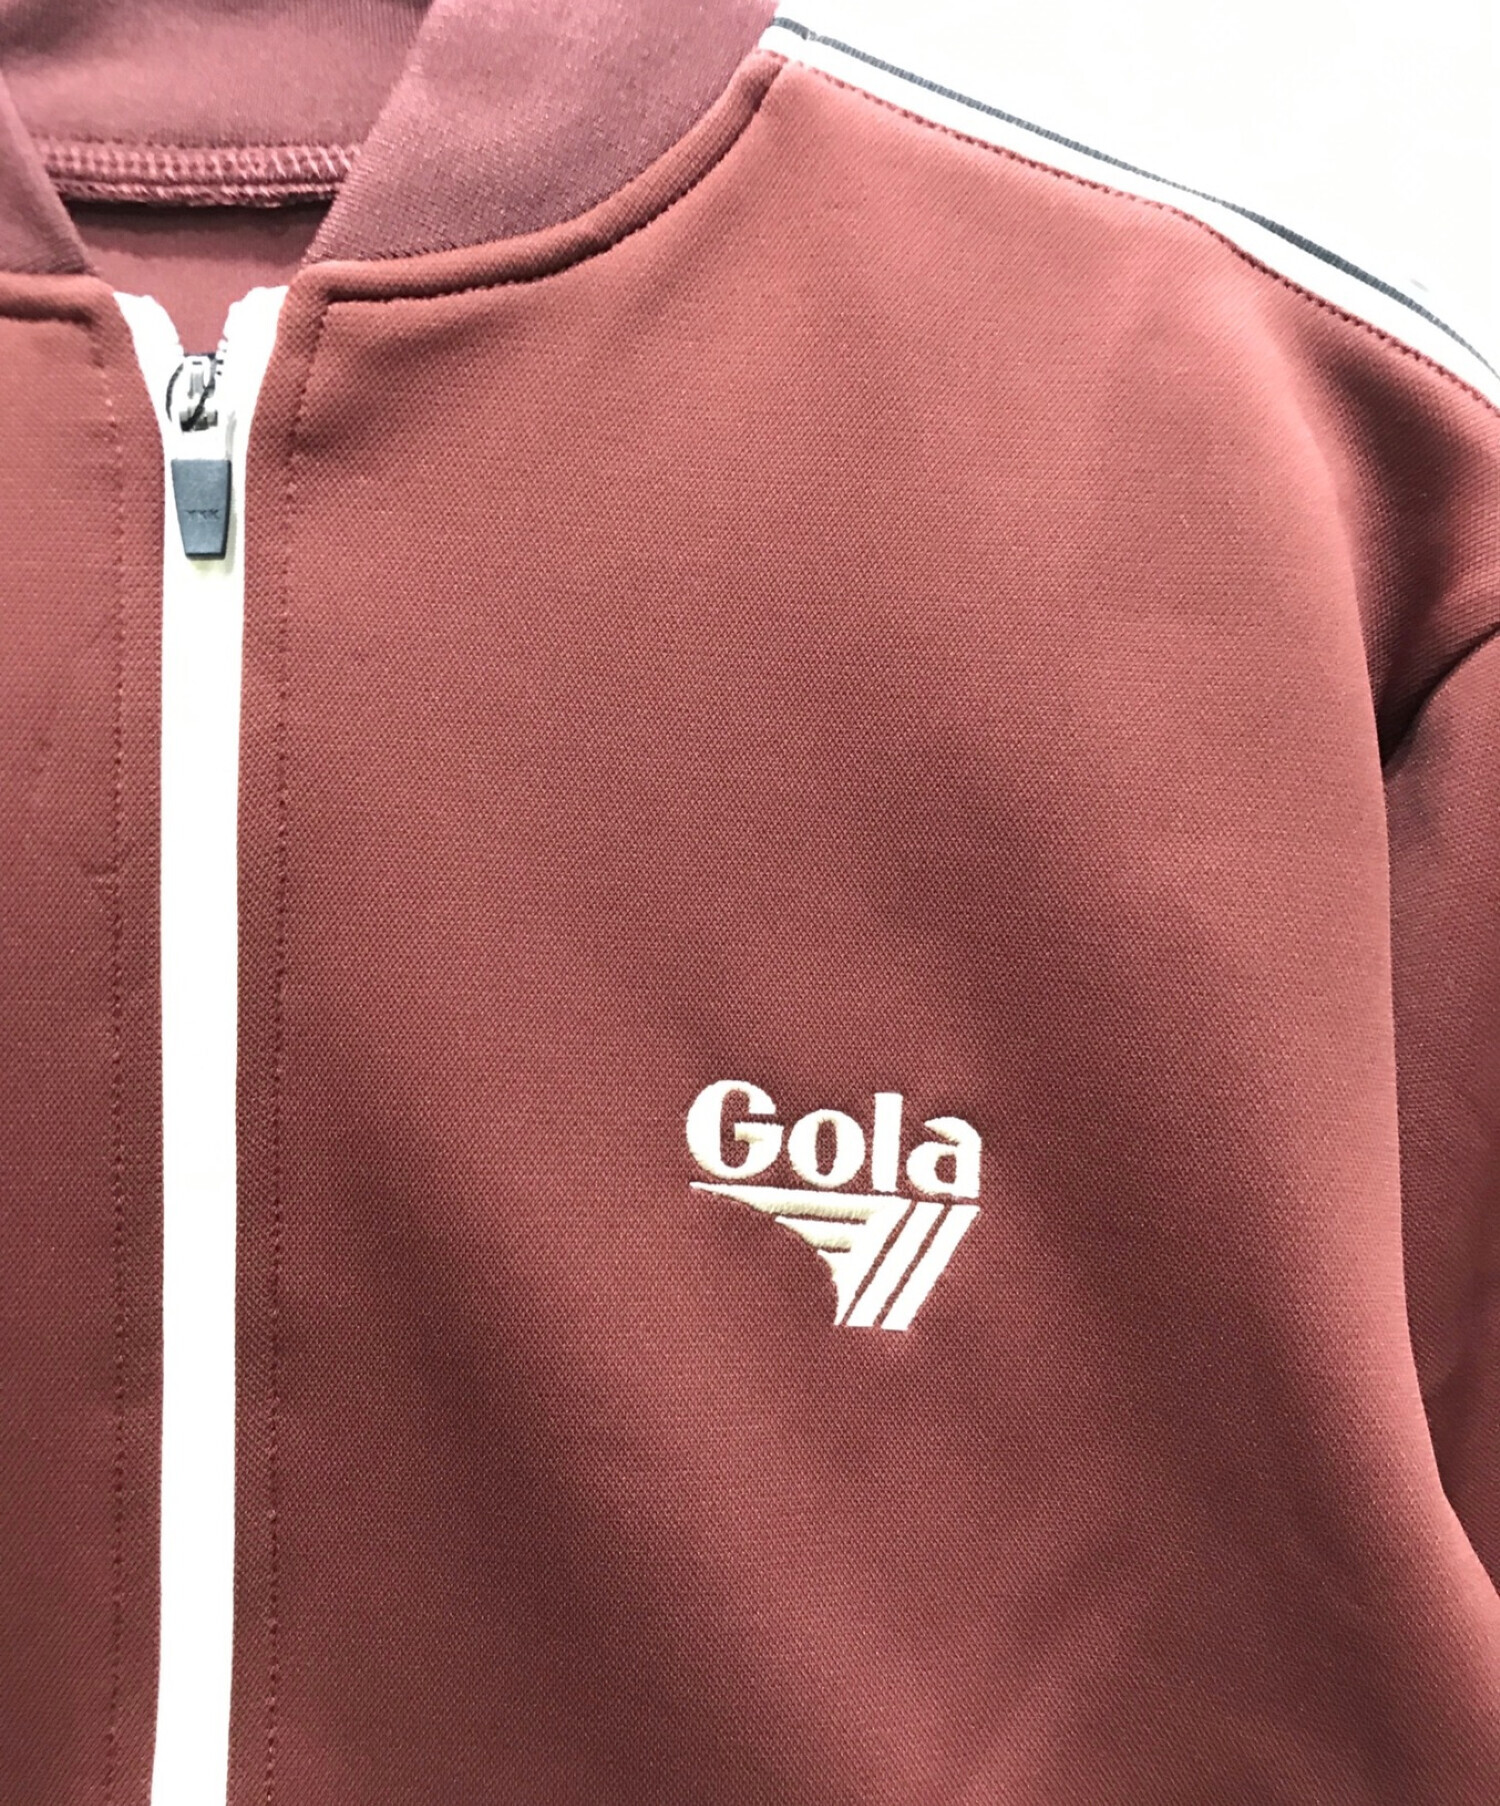 Gola (ゴーラ) ロゴライントラックジャケット ボルドー サイズ:M 未使用品